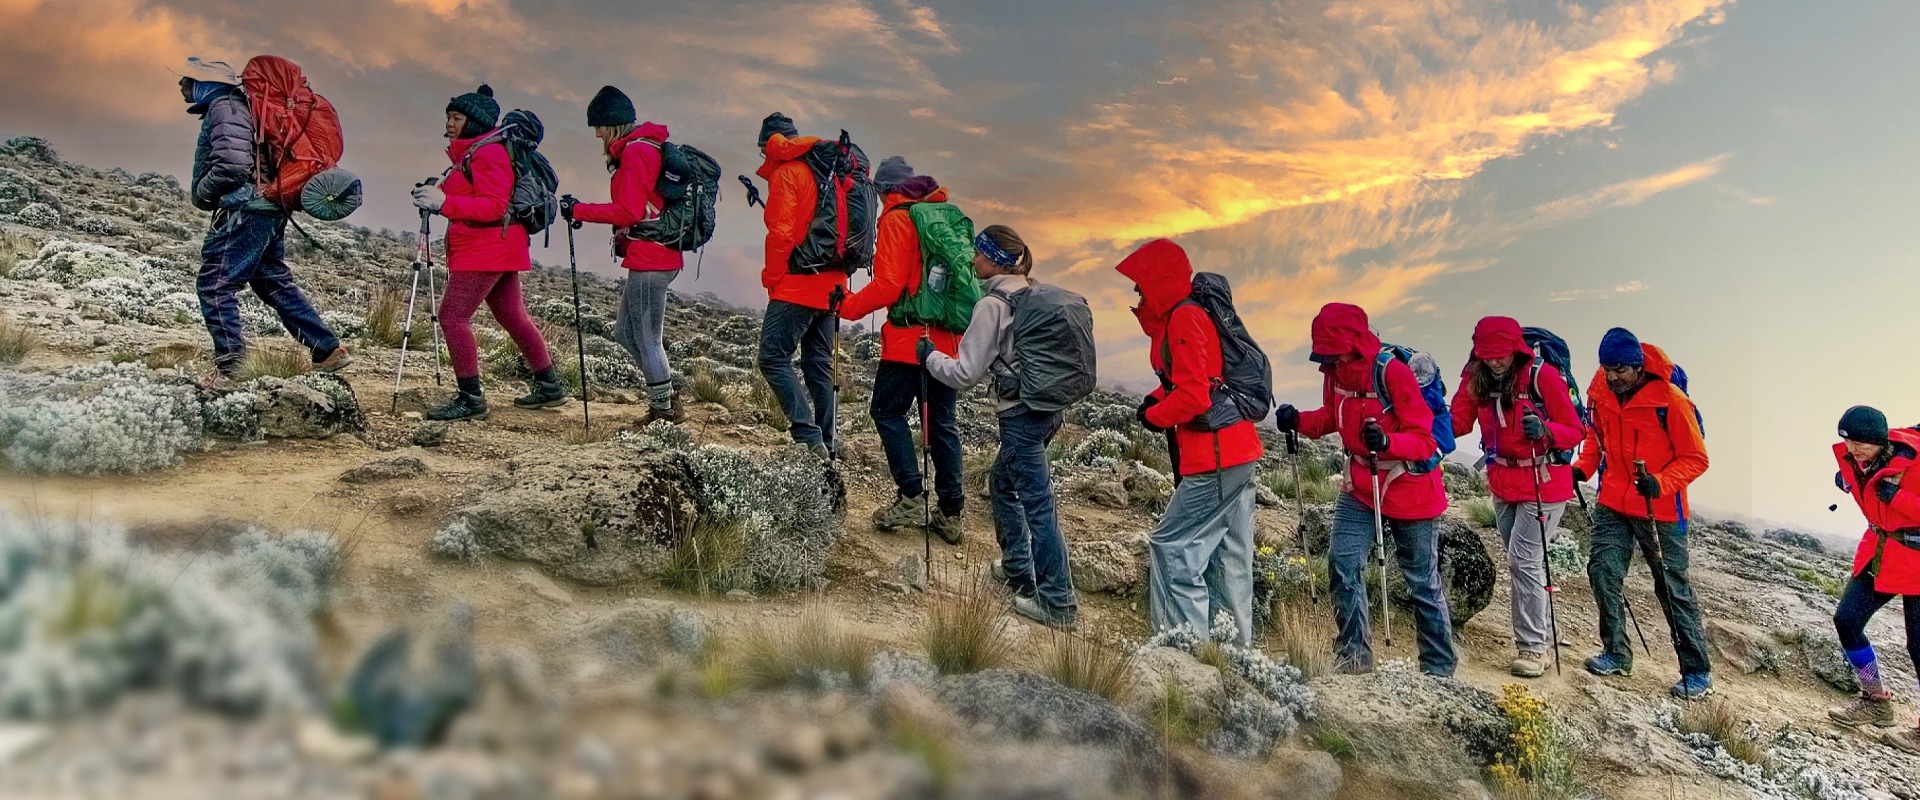 Kilimanjaro Travel Guides